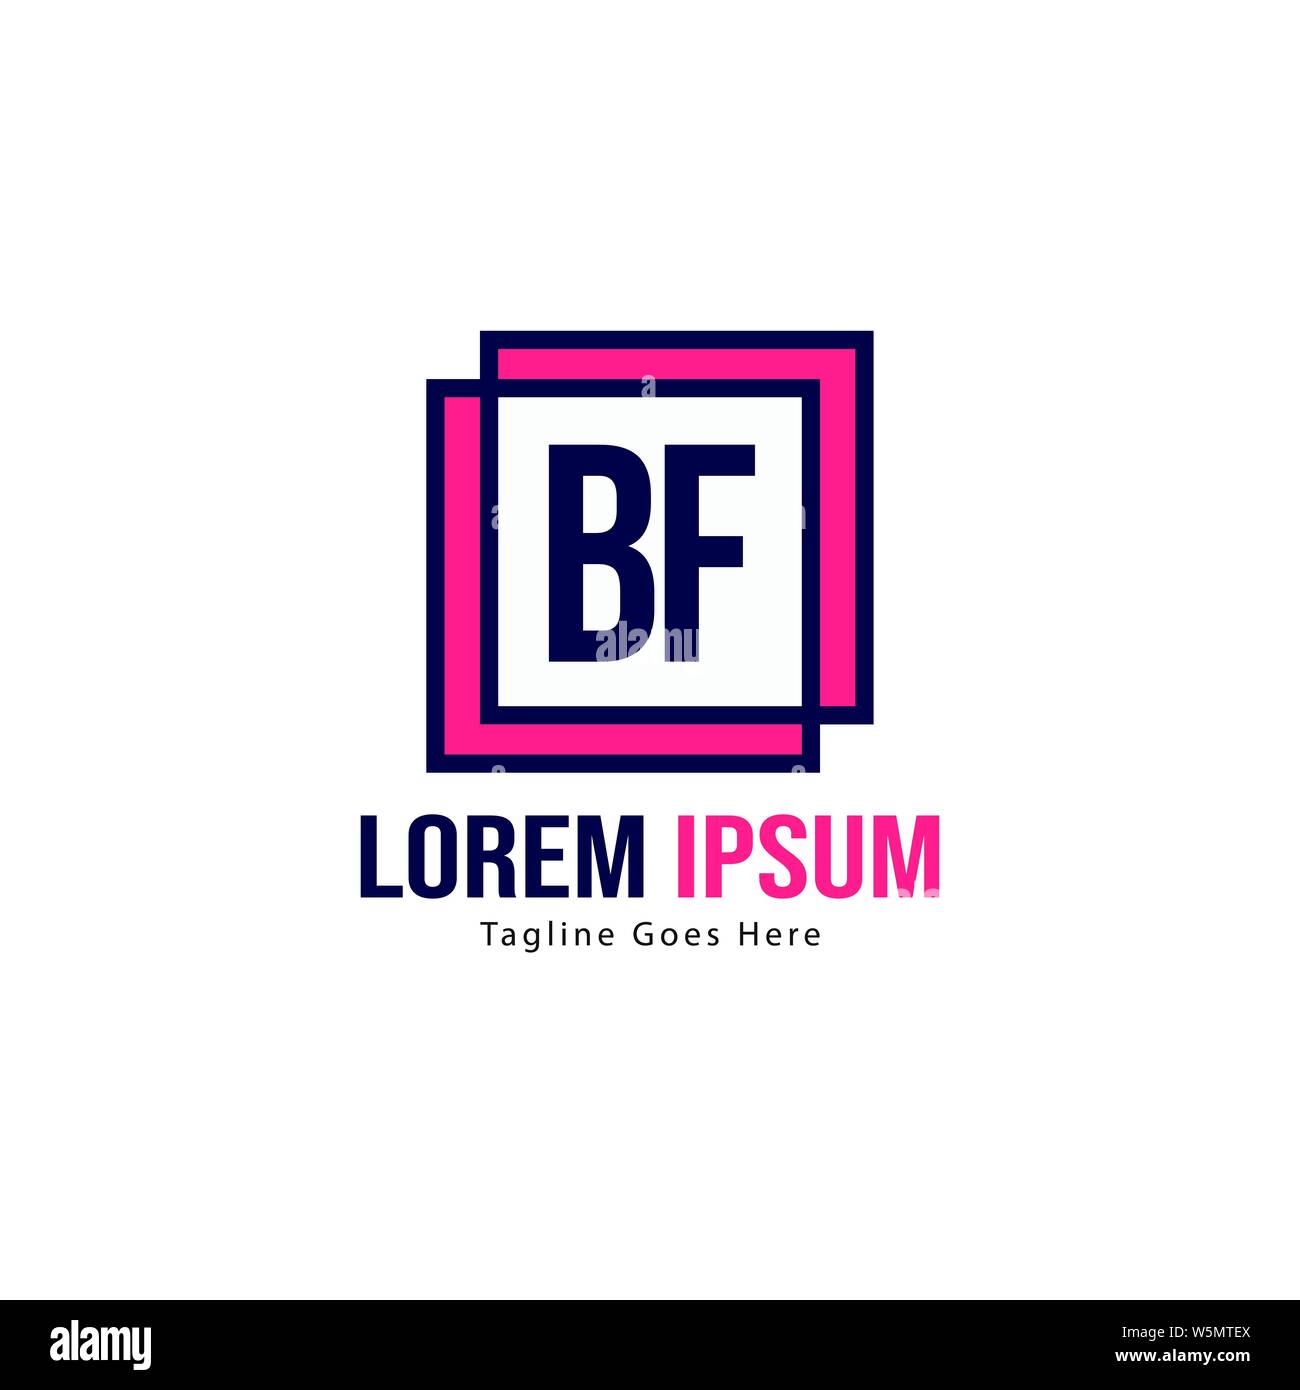 BF Letter Logo Design. Creative Modern BF Letters Icon Illustration design Stock Vector